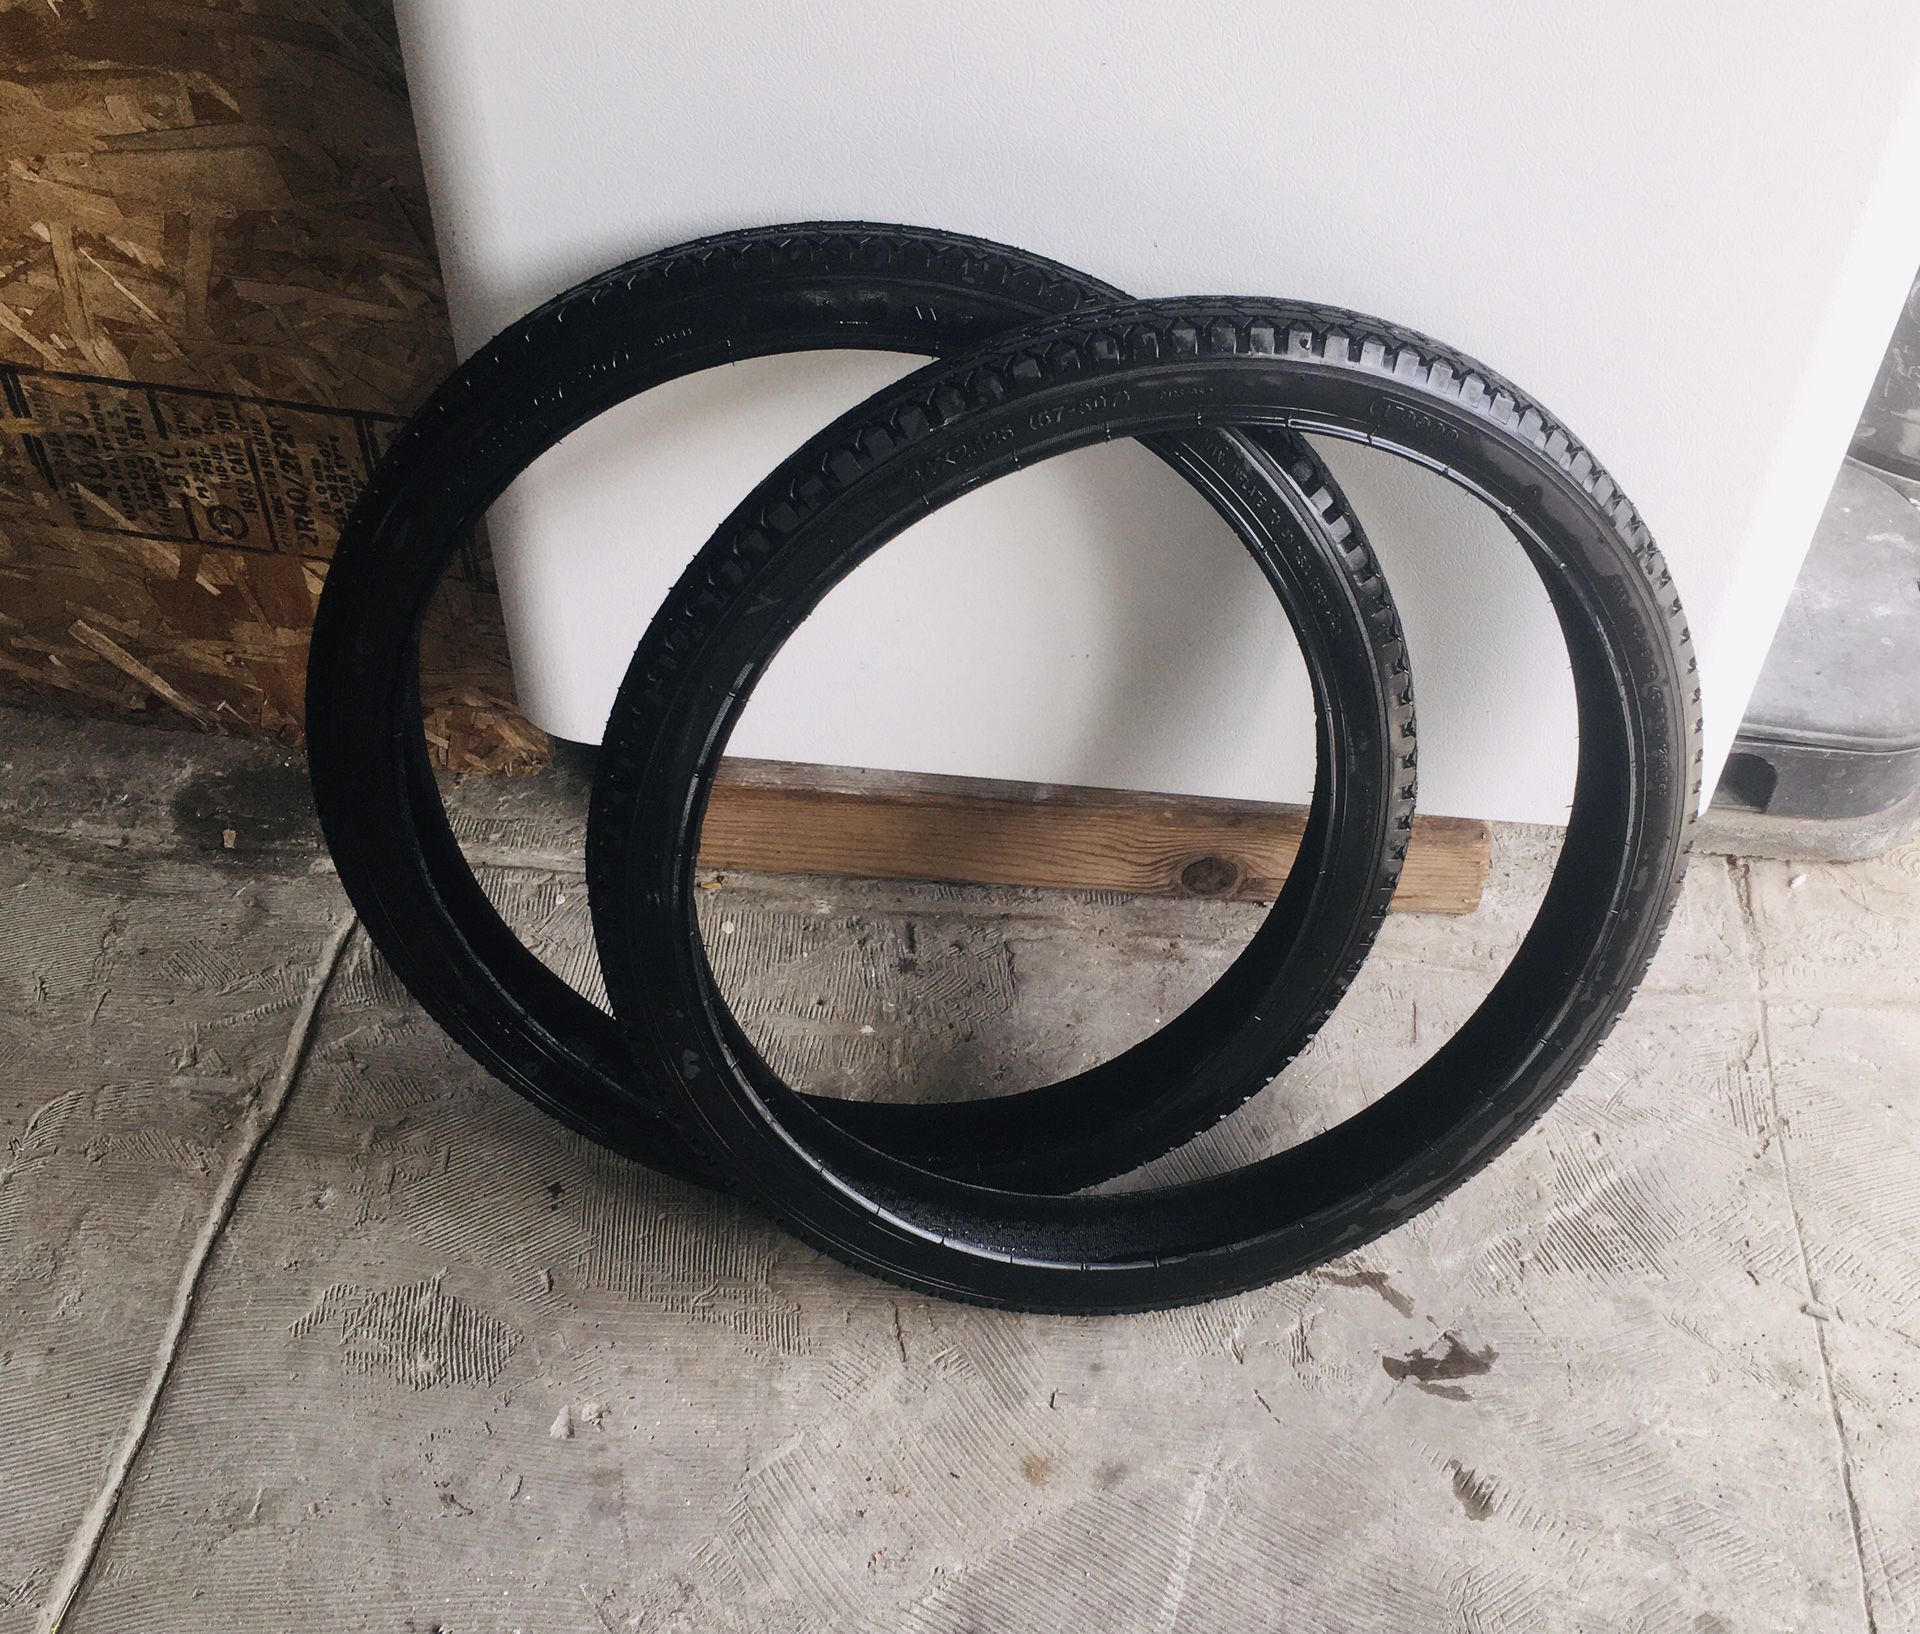 Size 24” bike tires beach cruiser bike parts